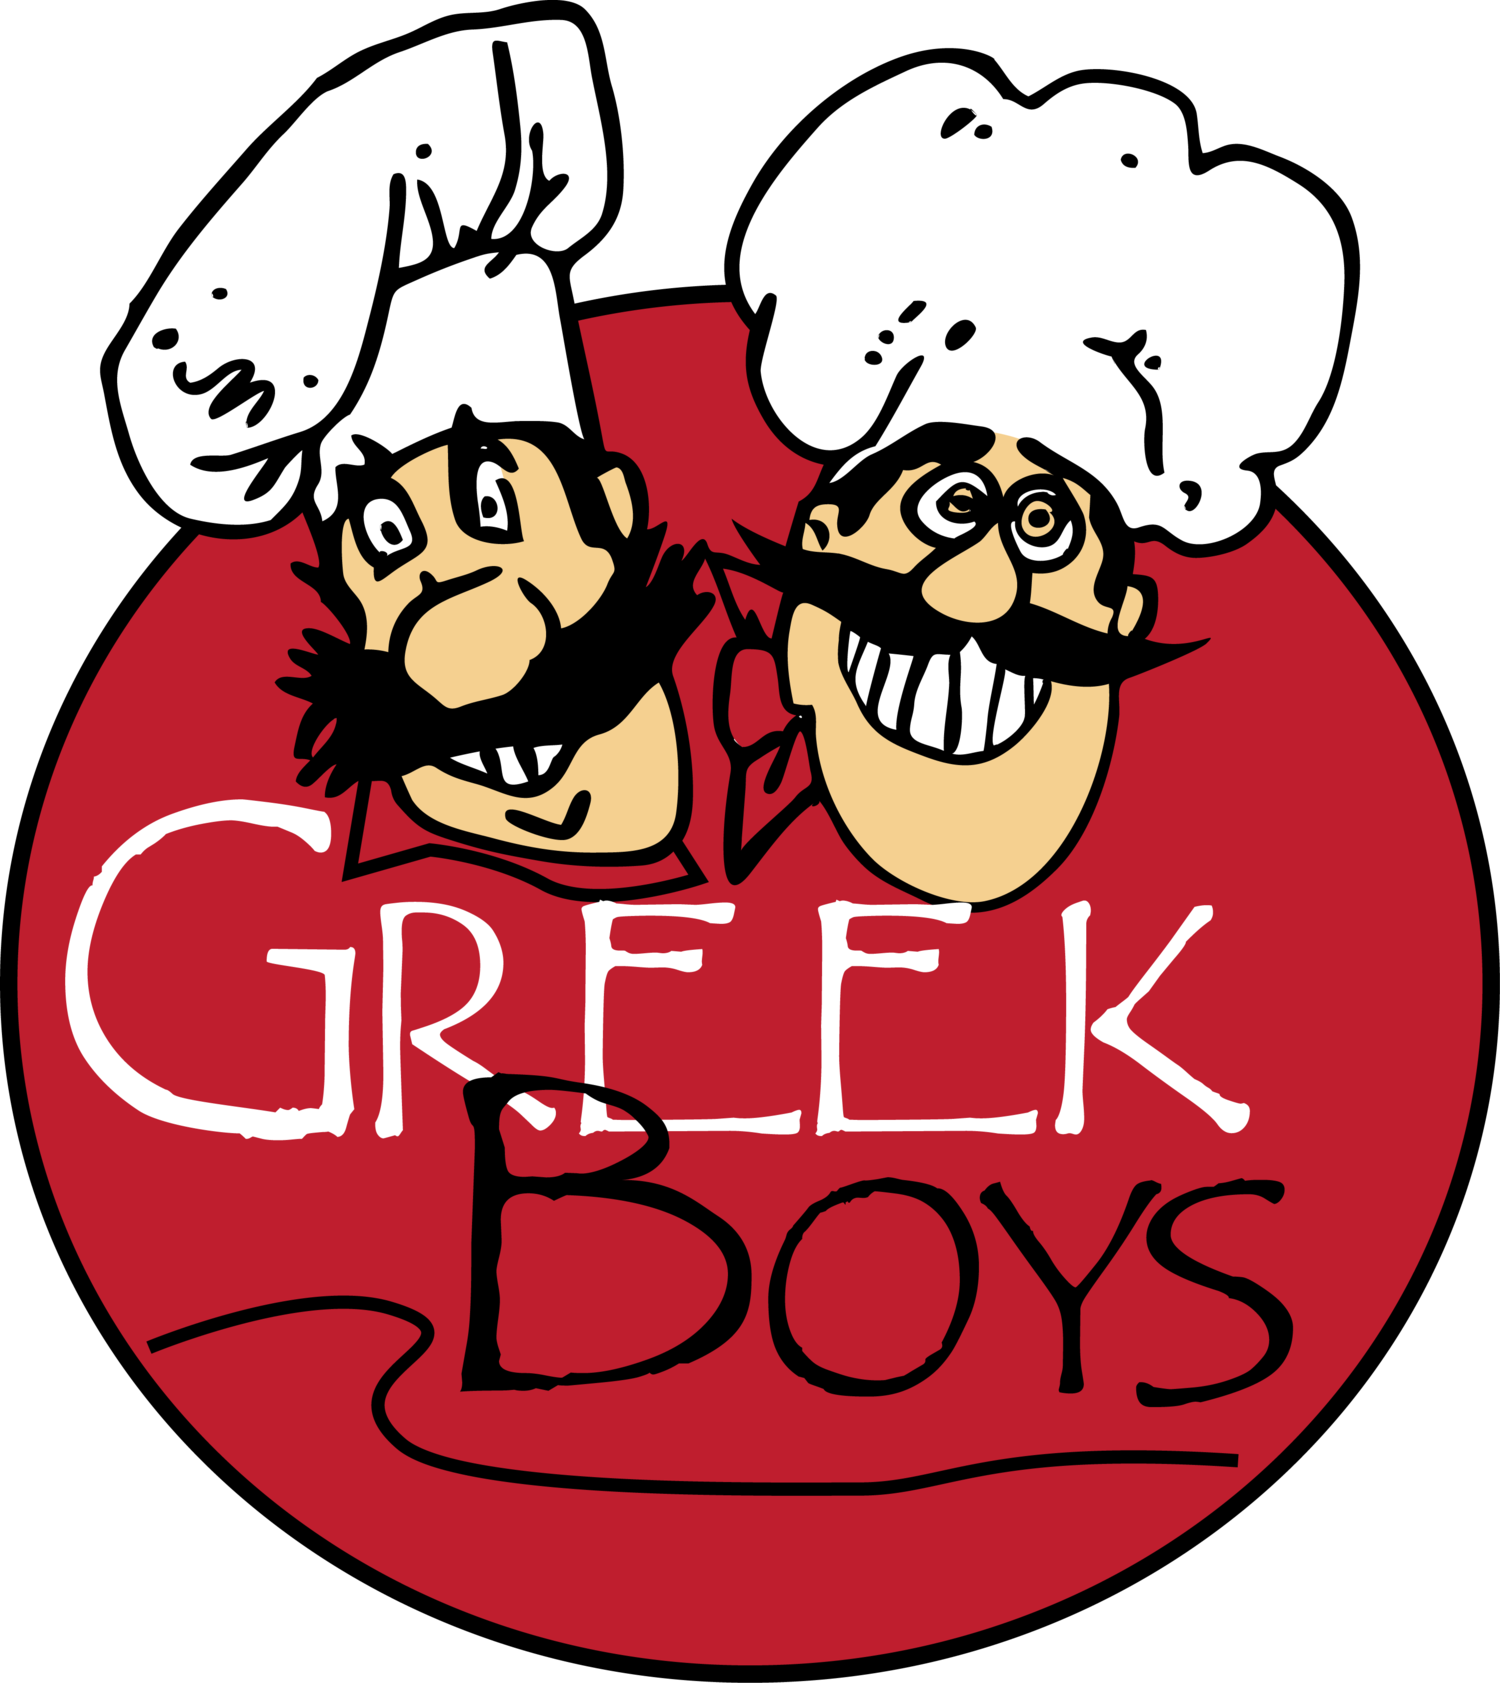 Boys . Greece clipart greek boy